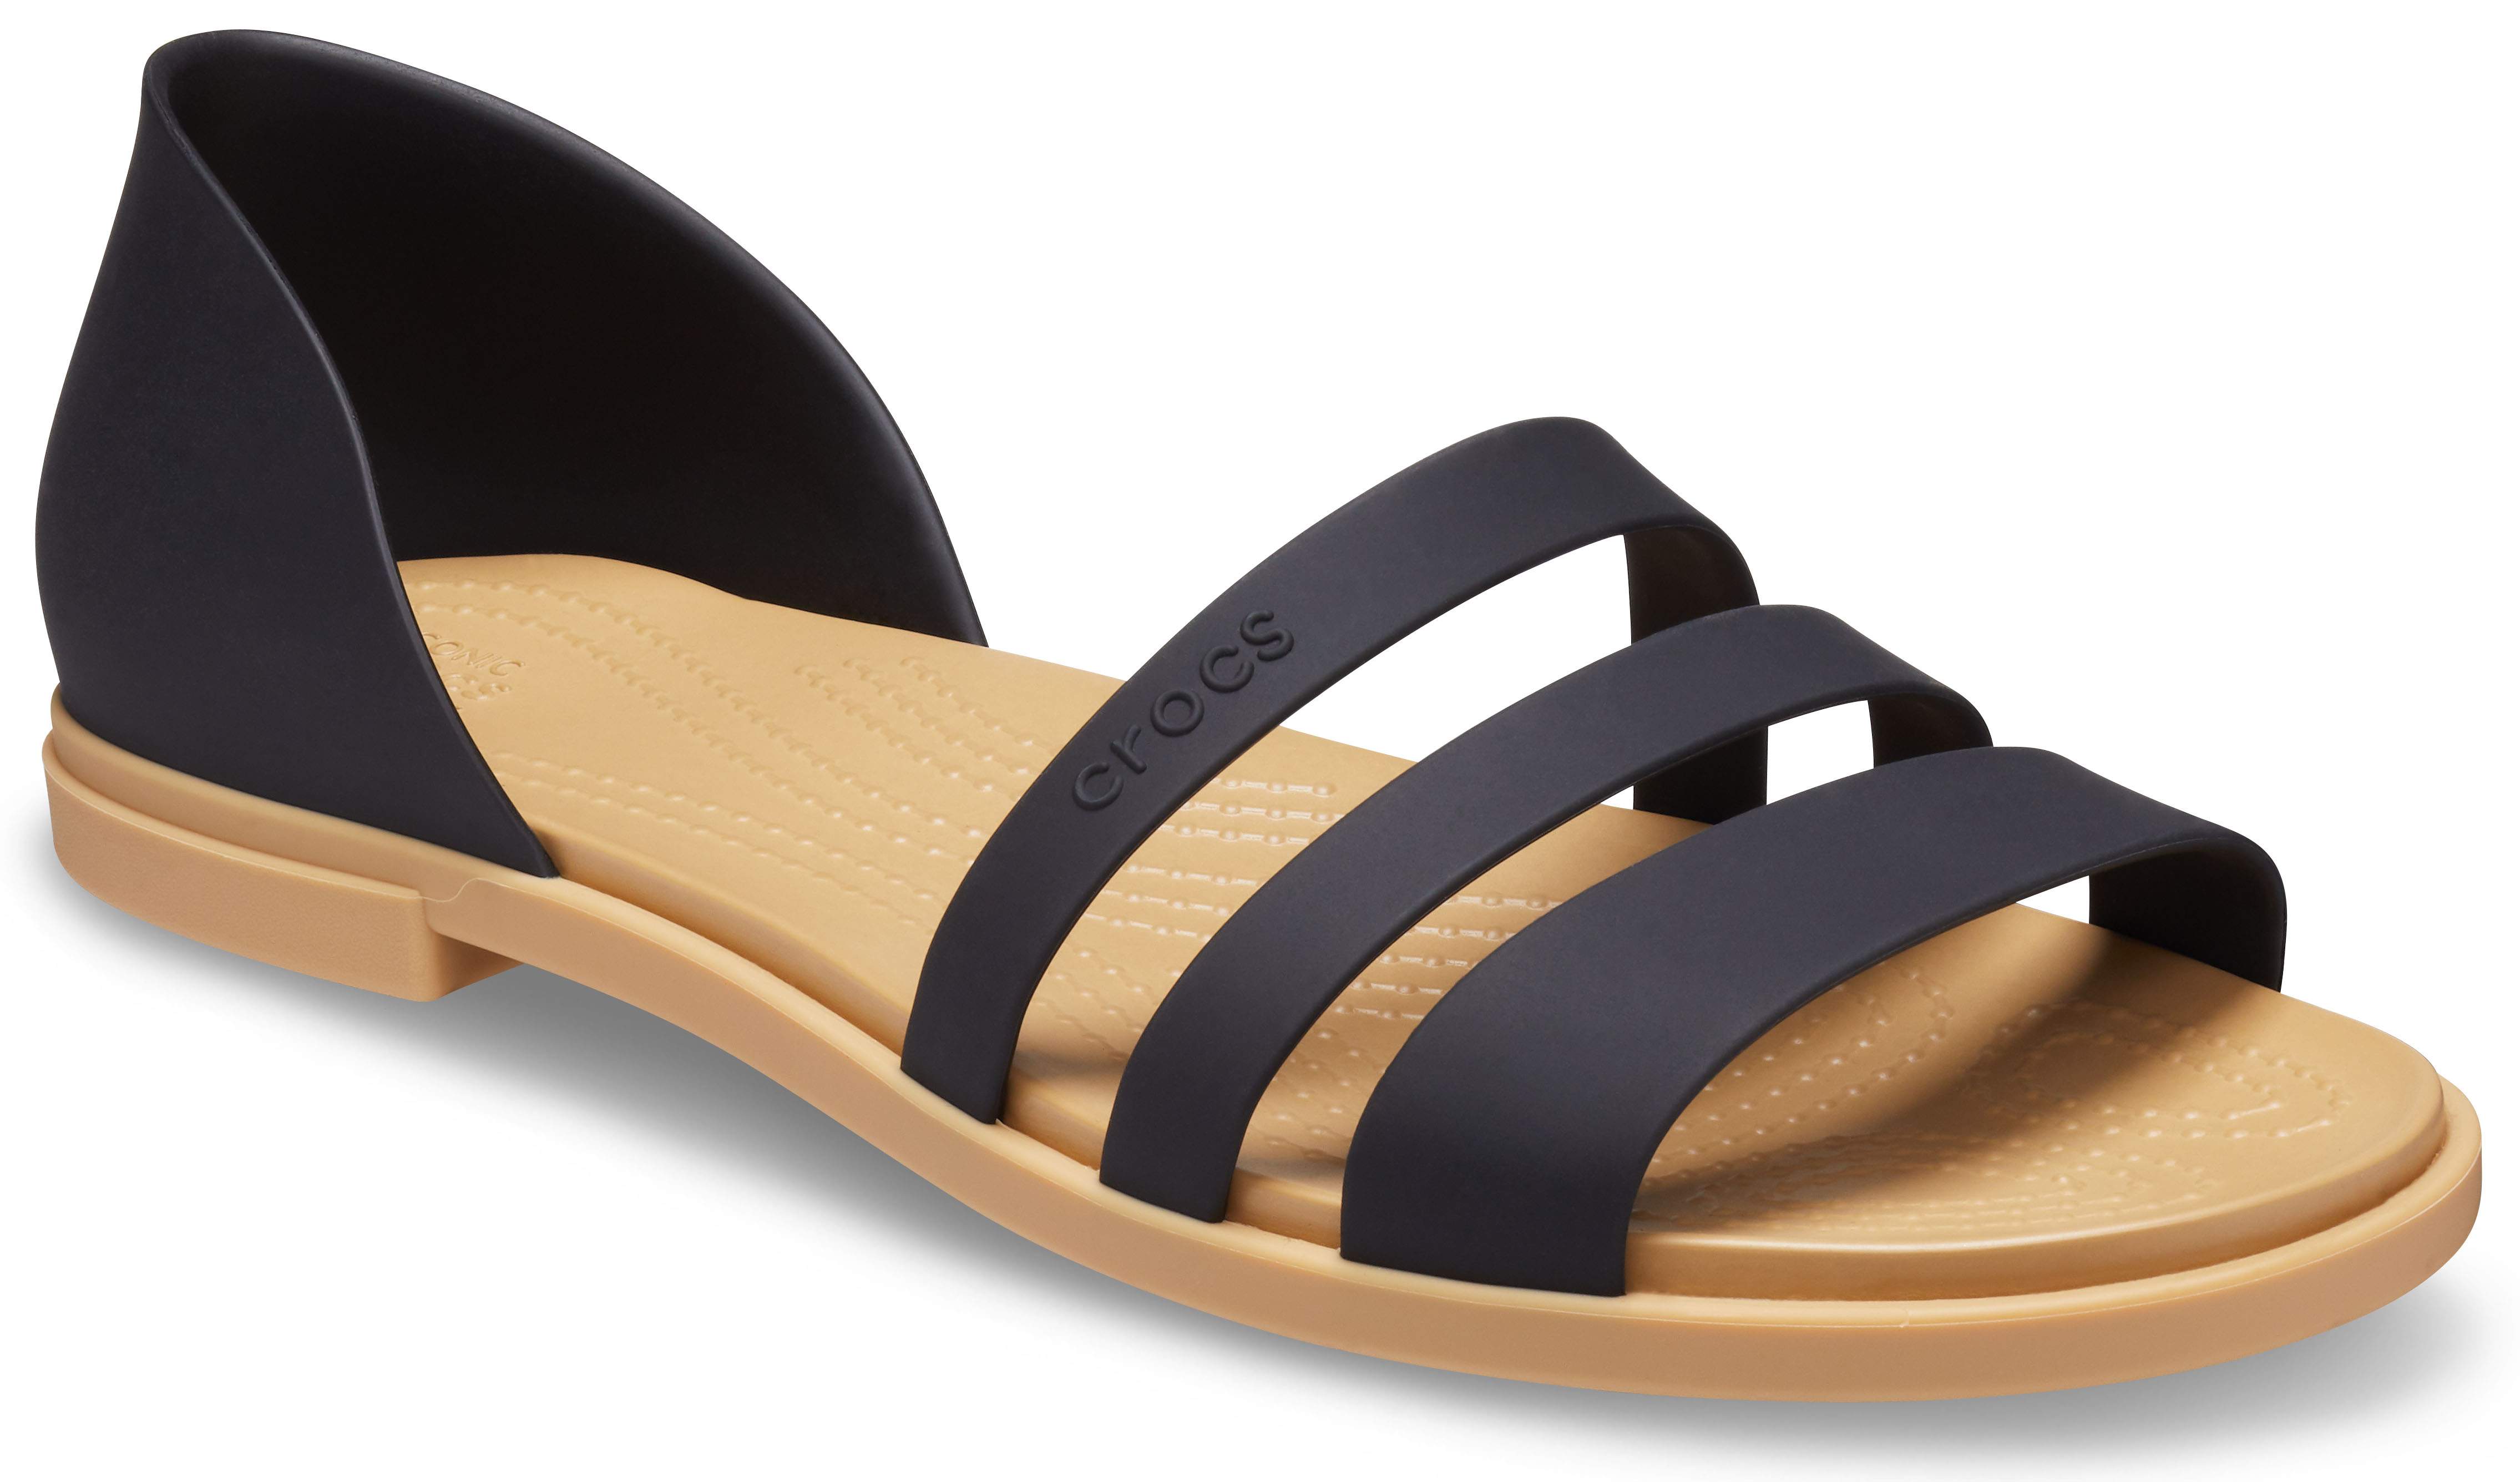 crocs sandals women